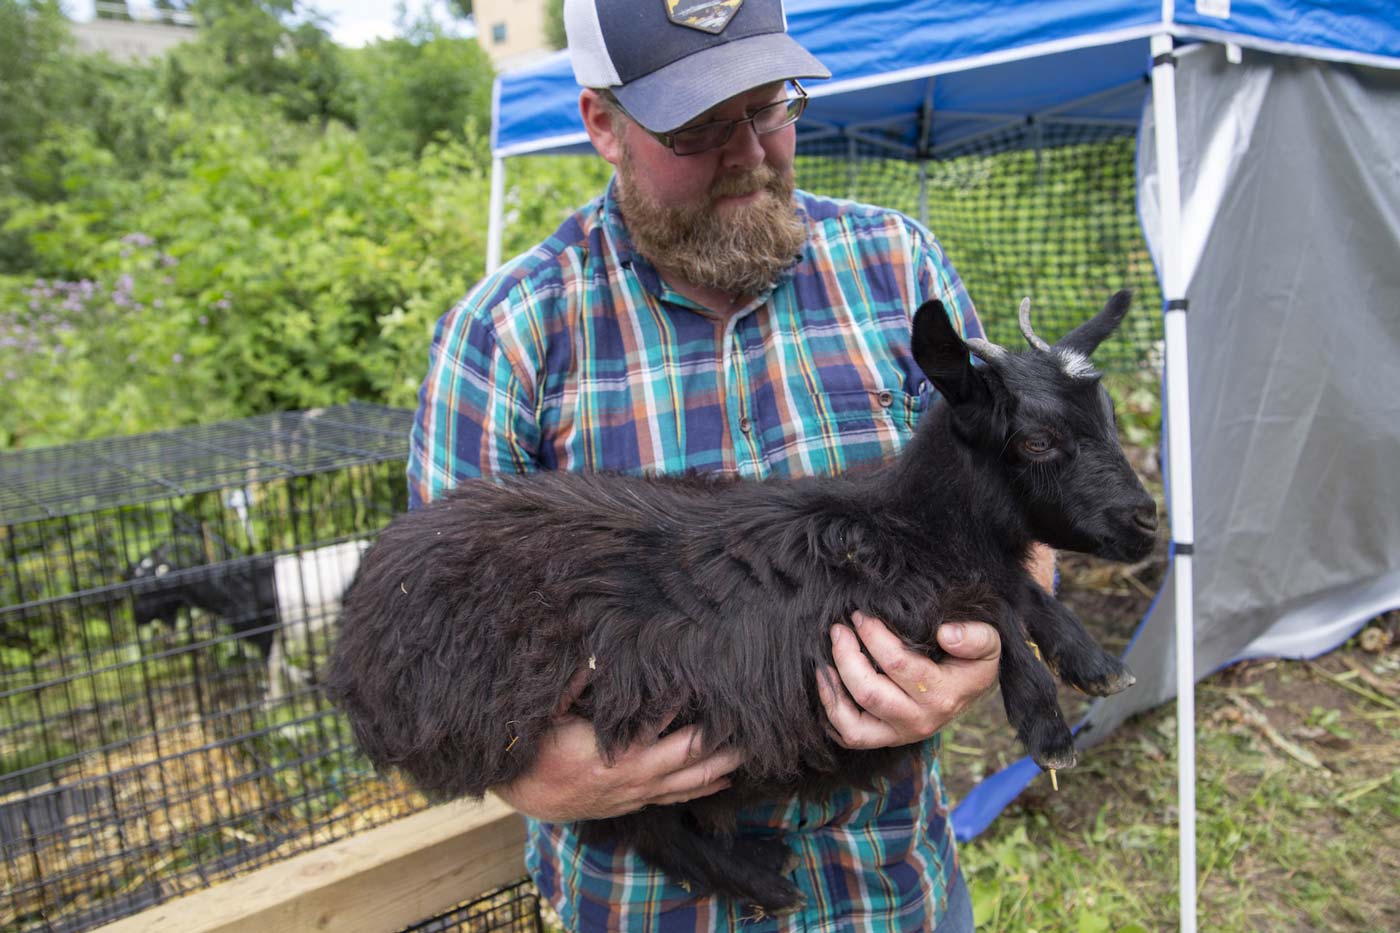 Man holding goat